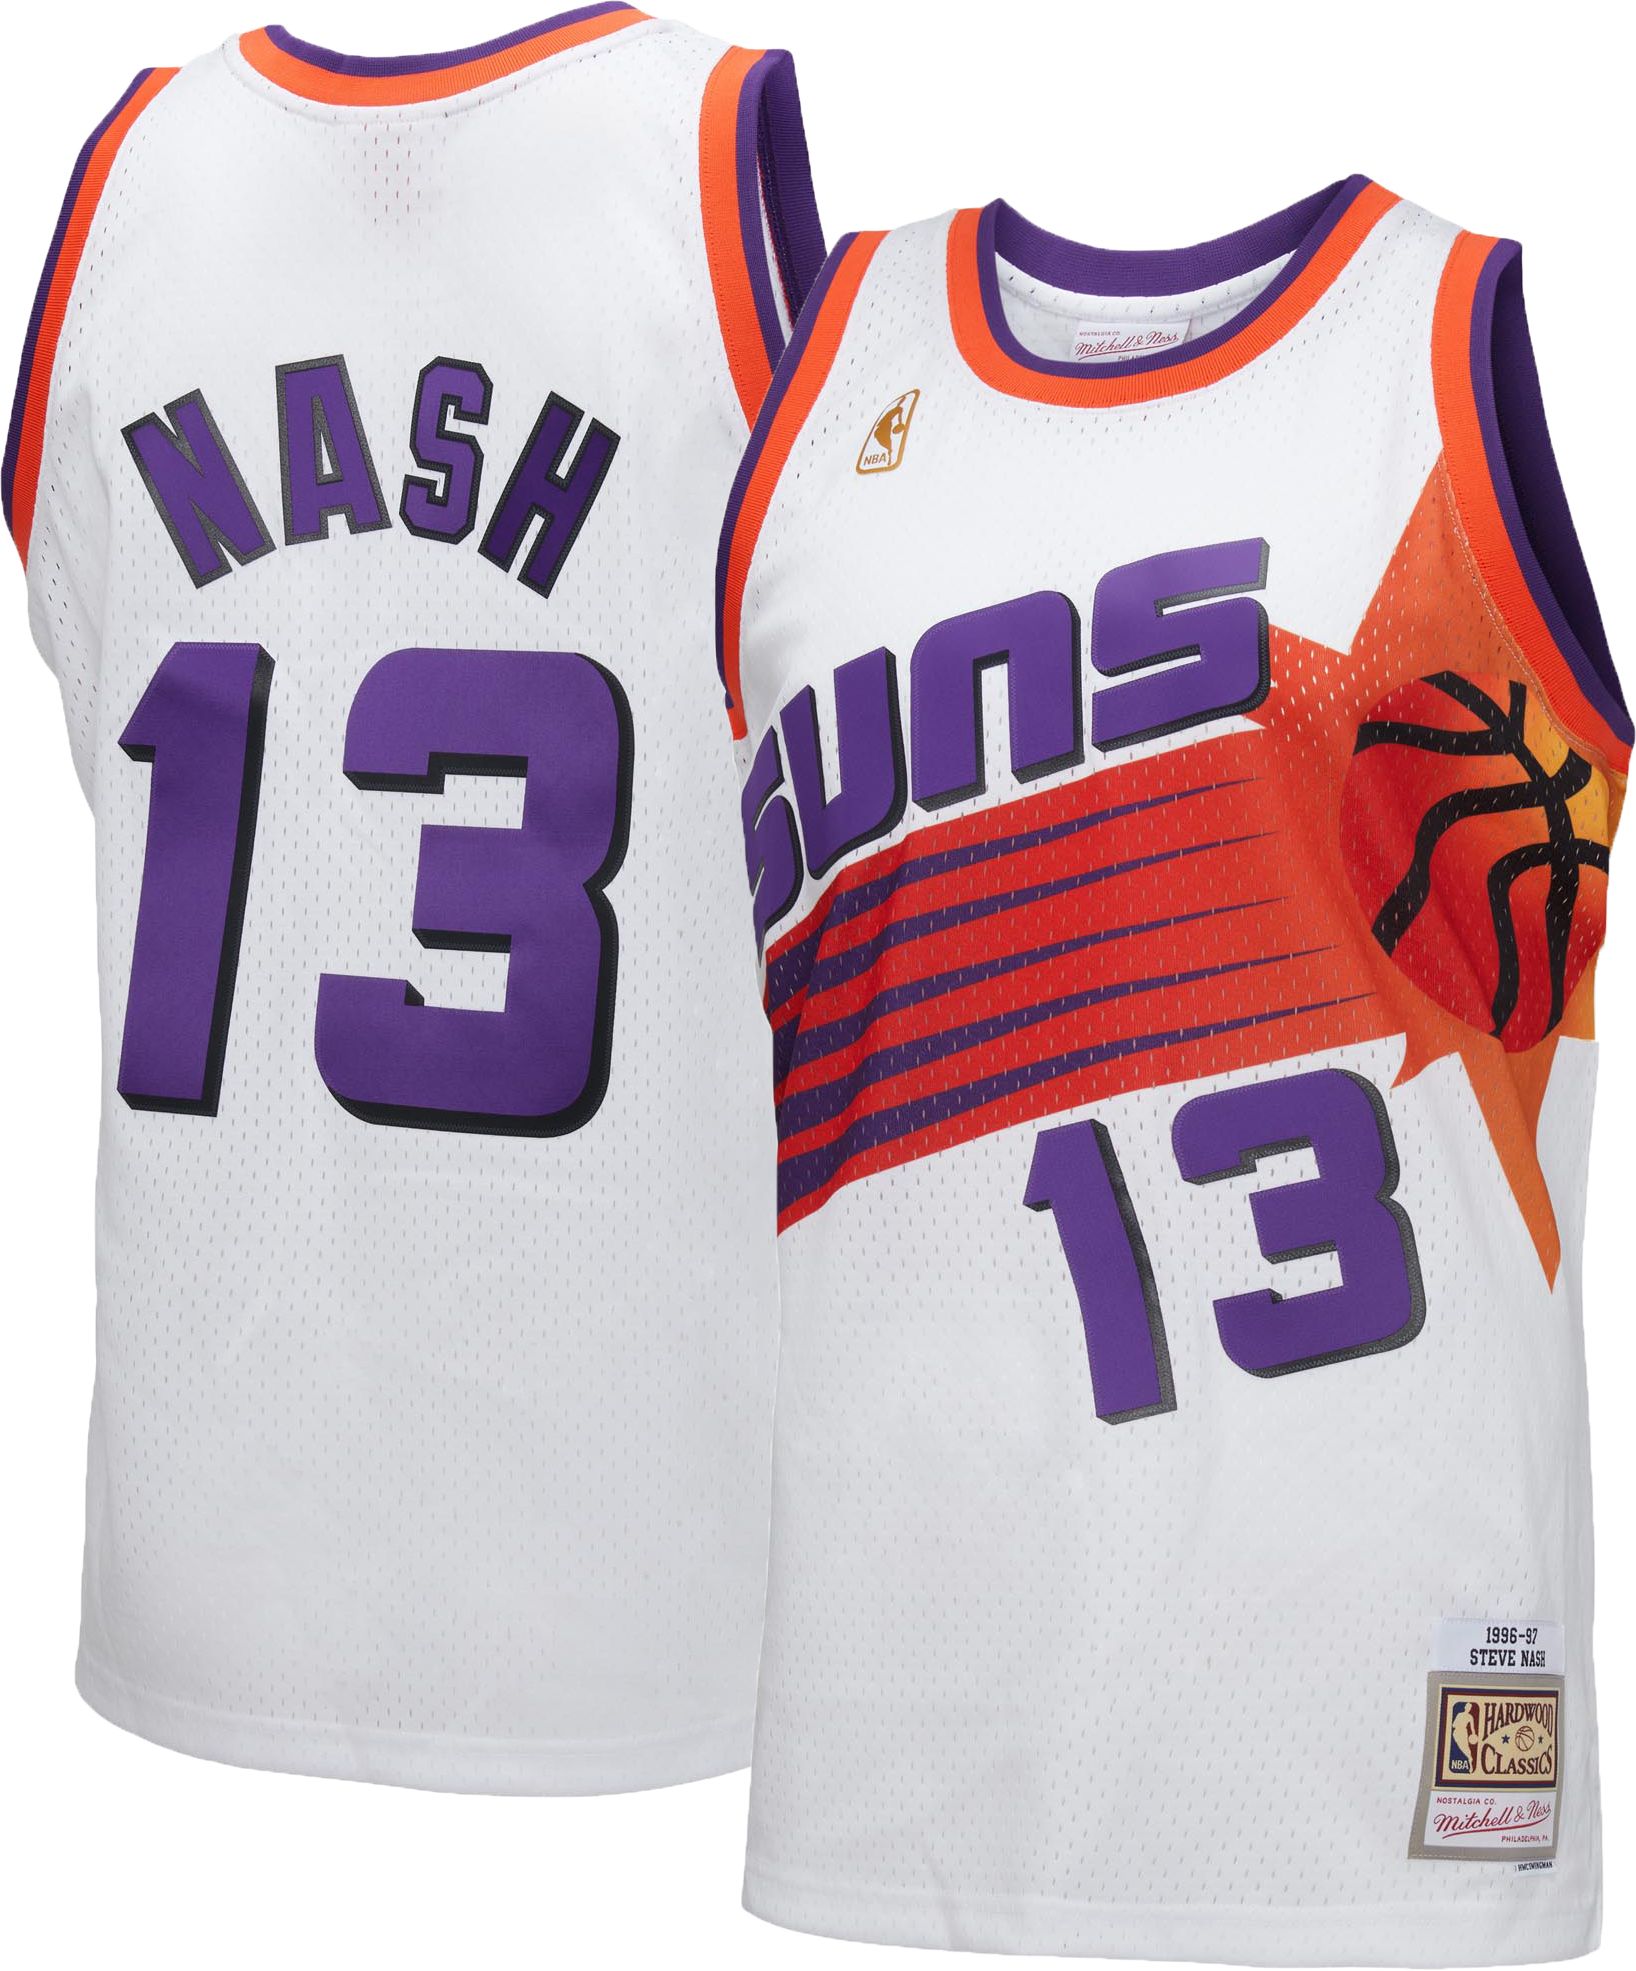 NWT Adidas Los Suns NBA Basketball Jersey Latin Nights Steve Nash 13  Pheonix XL